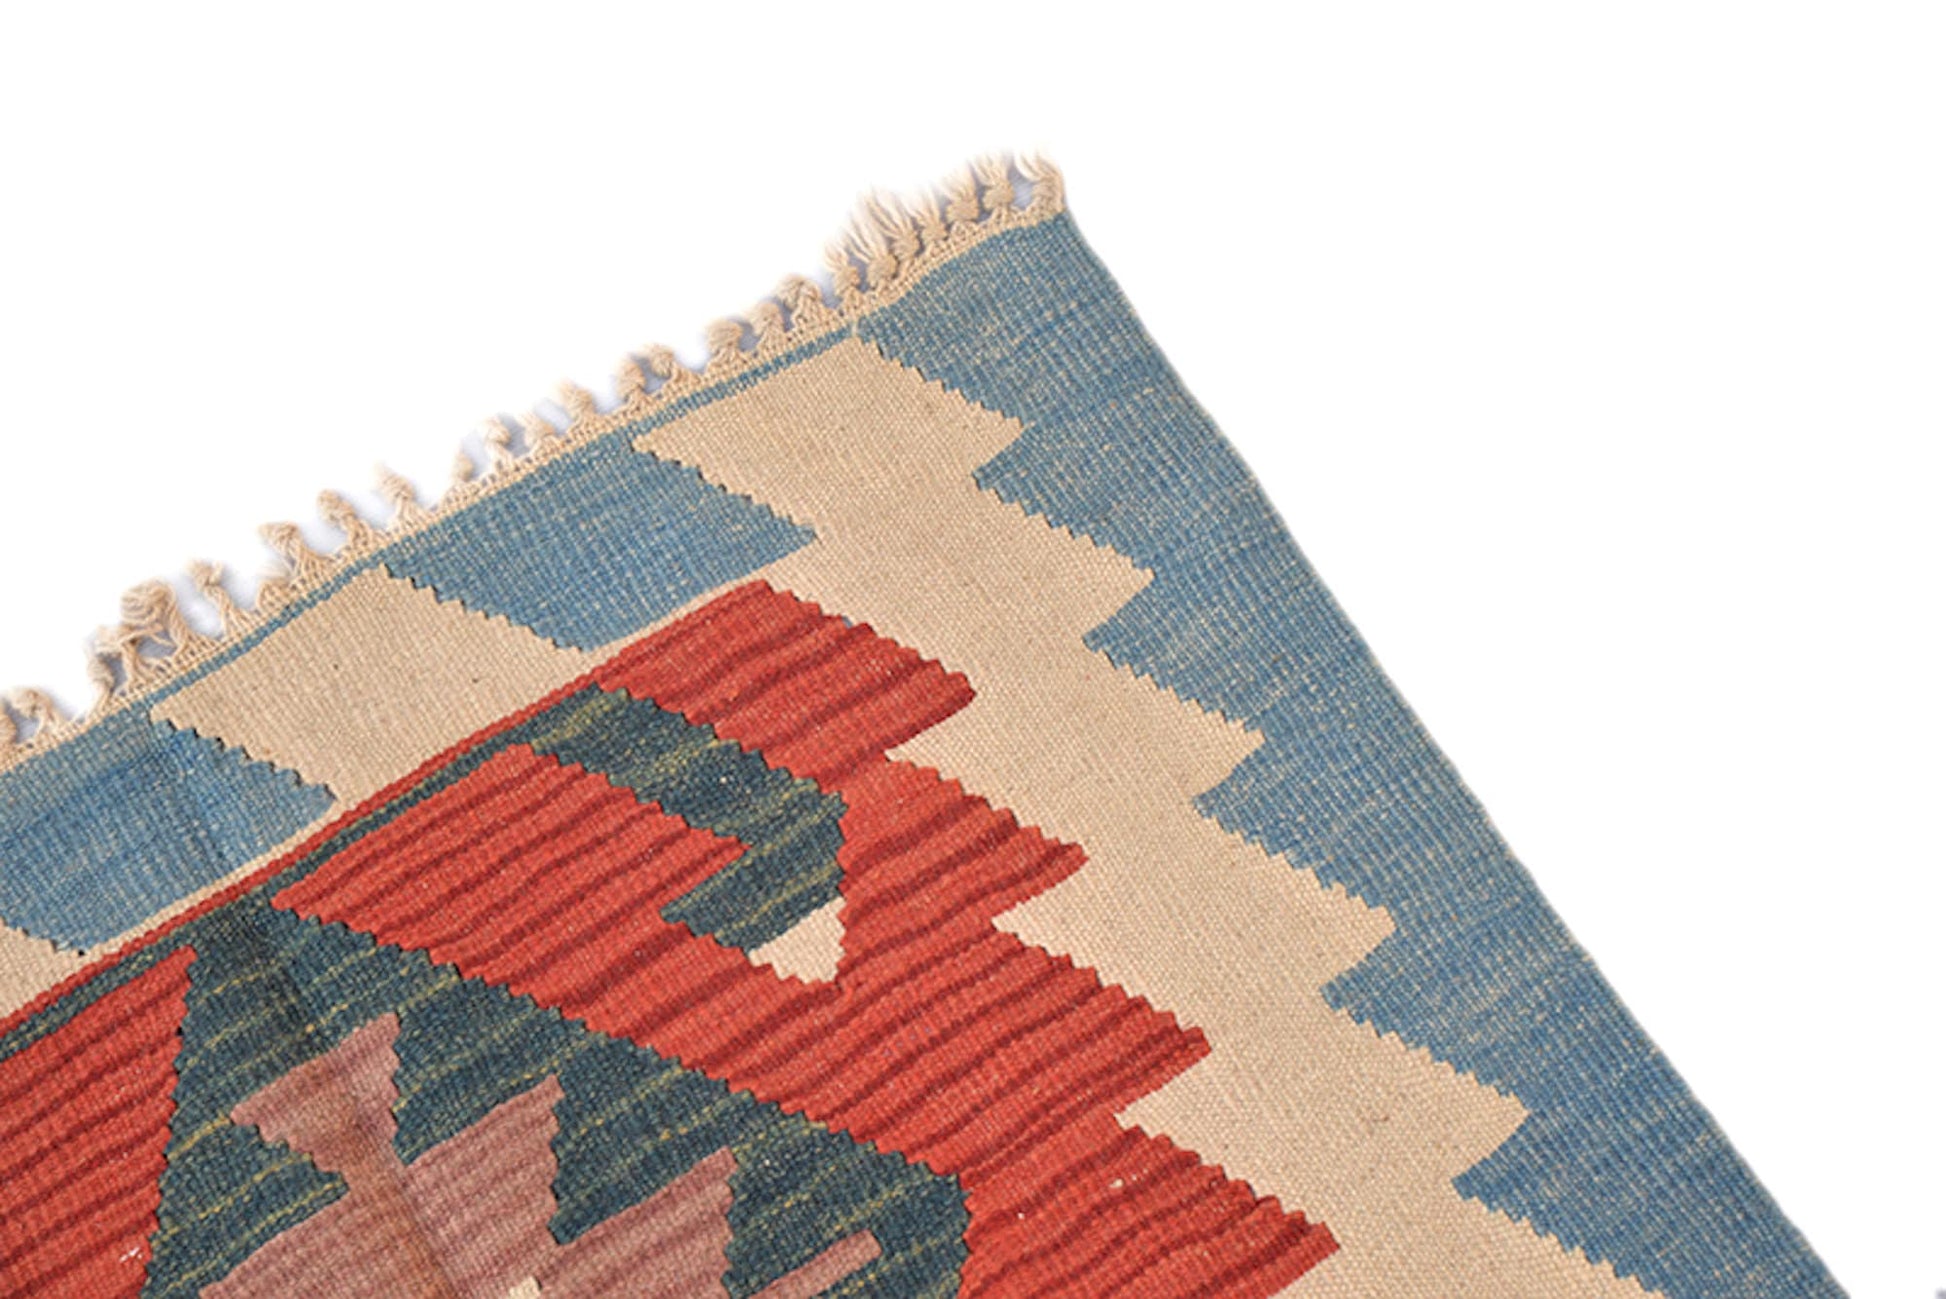 3 x 4 Orange Beige Tribal Rug | Hand Knotted Wool Area Rug | Flatweave Low Pile Tribal Rustic Colored Ruge